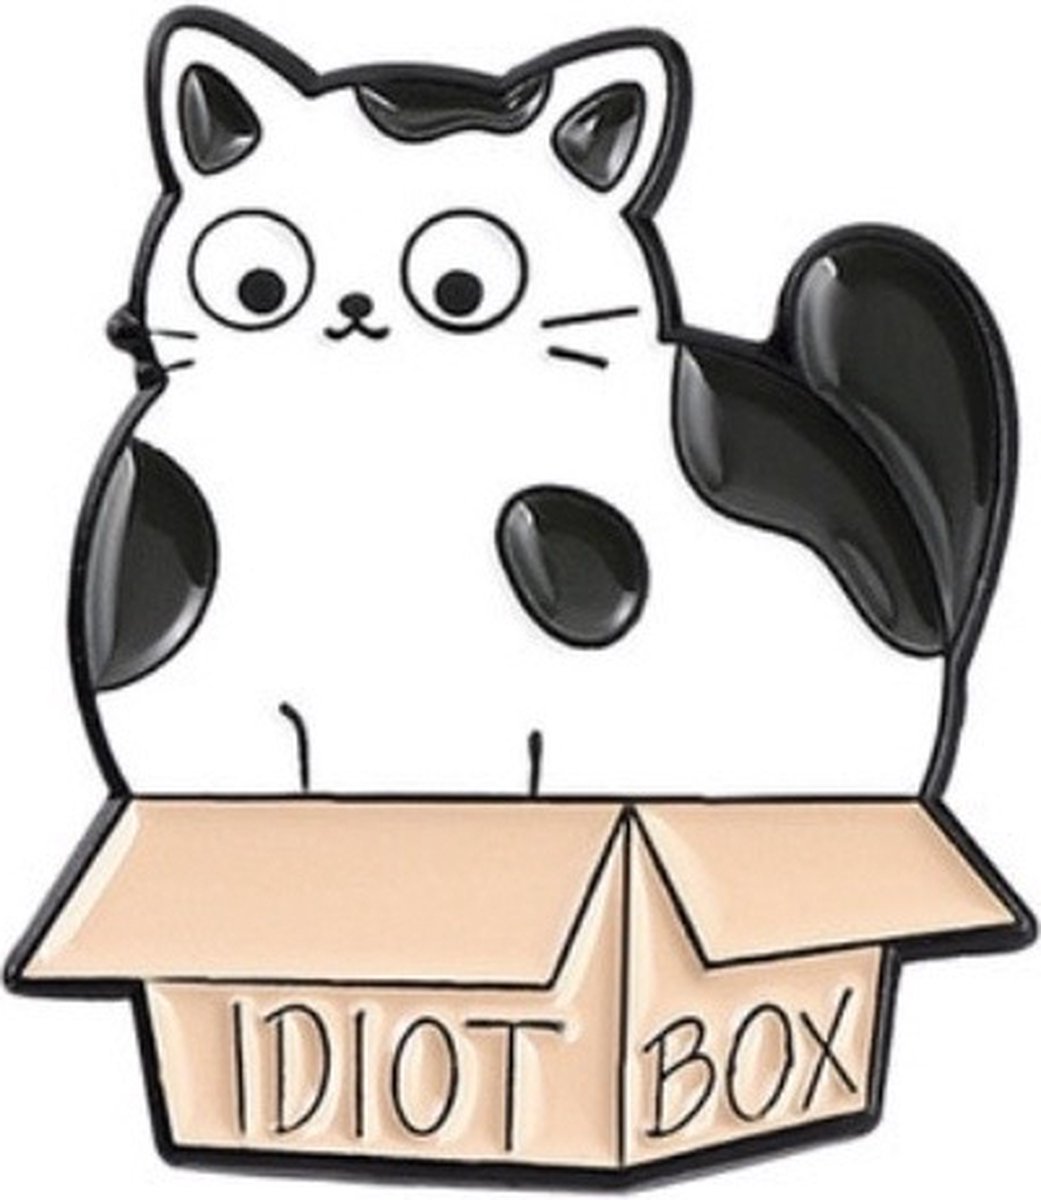 Katten pin idiot box - kattenpin - kledingspeld - kattenspeld - katten speld - kledingspeld - katten pin - katten accessoire - kleding pin - kledingpin